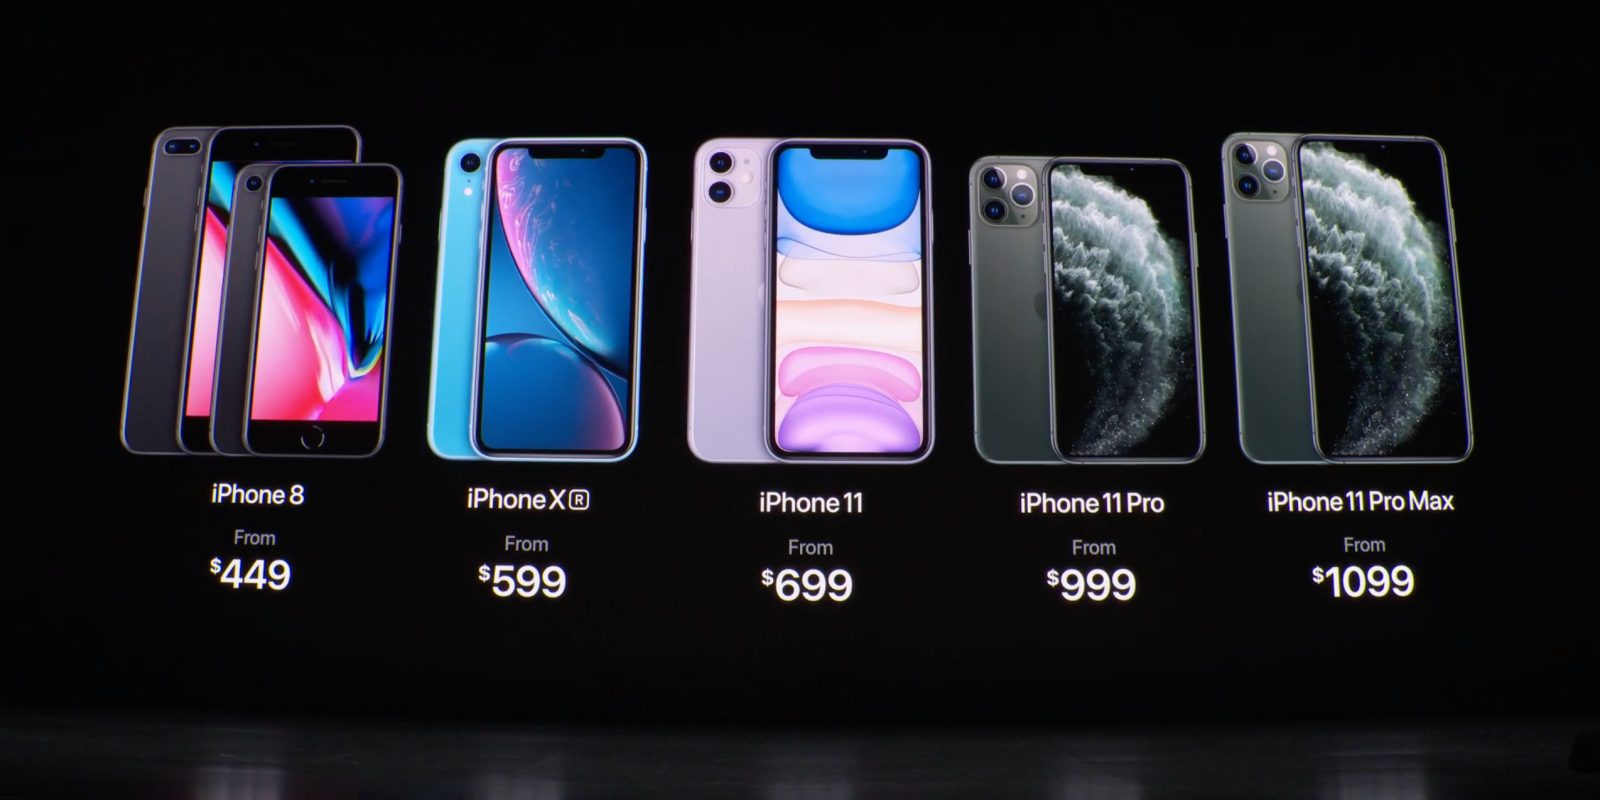 iPhone 11: Features, Release Date, Price, Cameras, etc ...